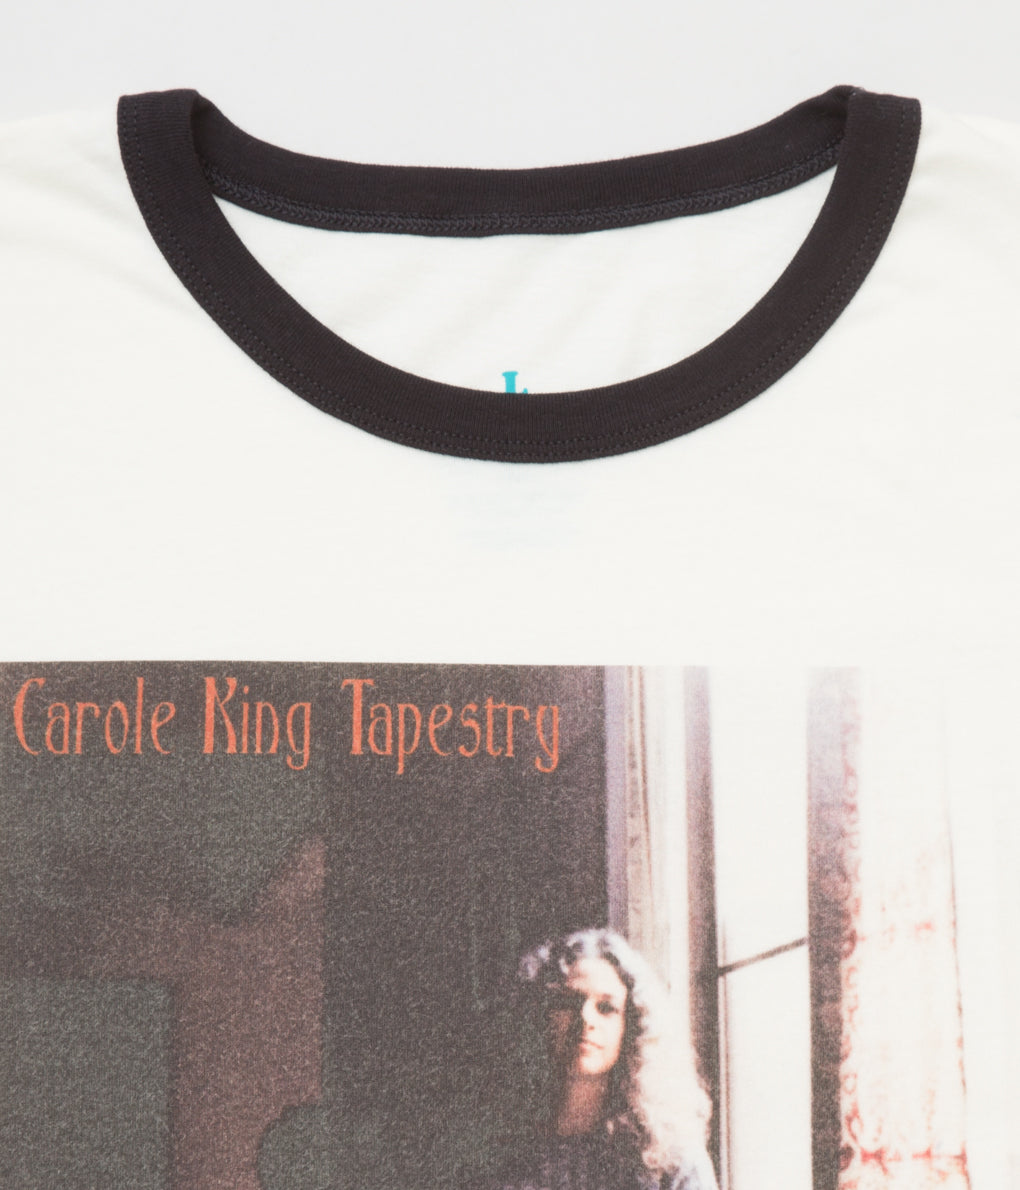 BLUESCENTRIC "CAROLE KING TAPESTRY RINGER" (CREAM)